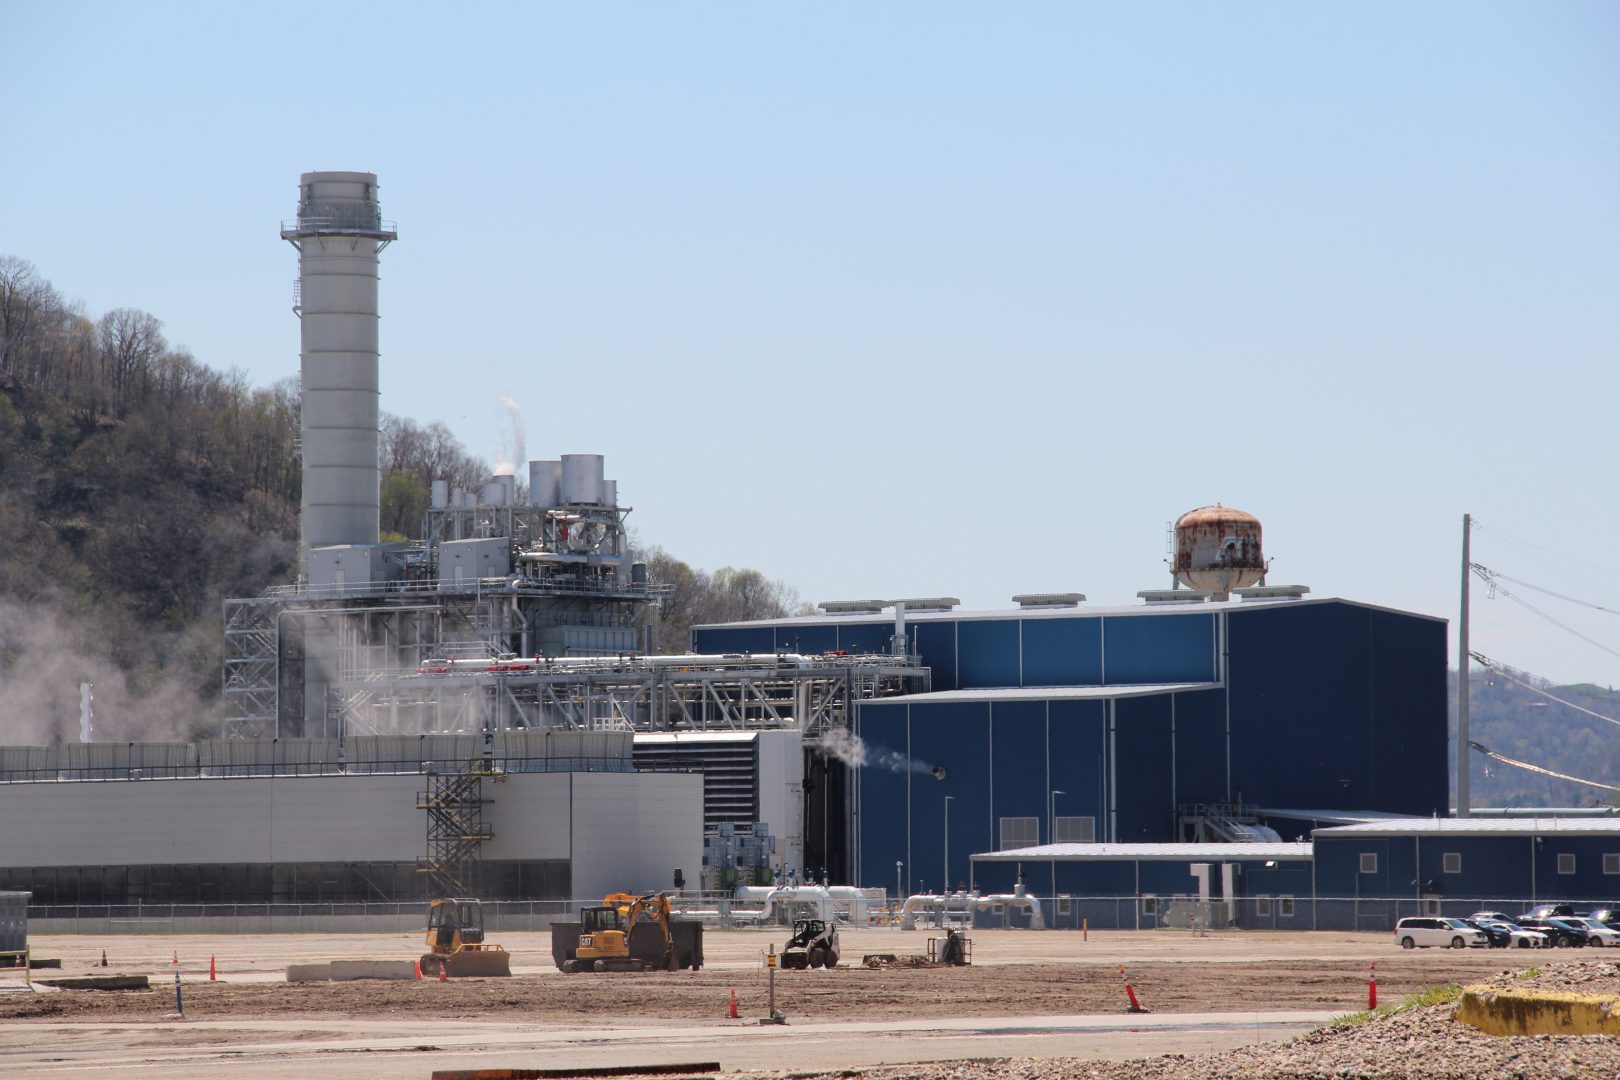 Long Ridge Energy Generation plant